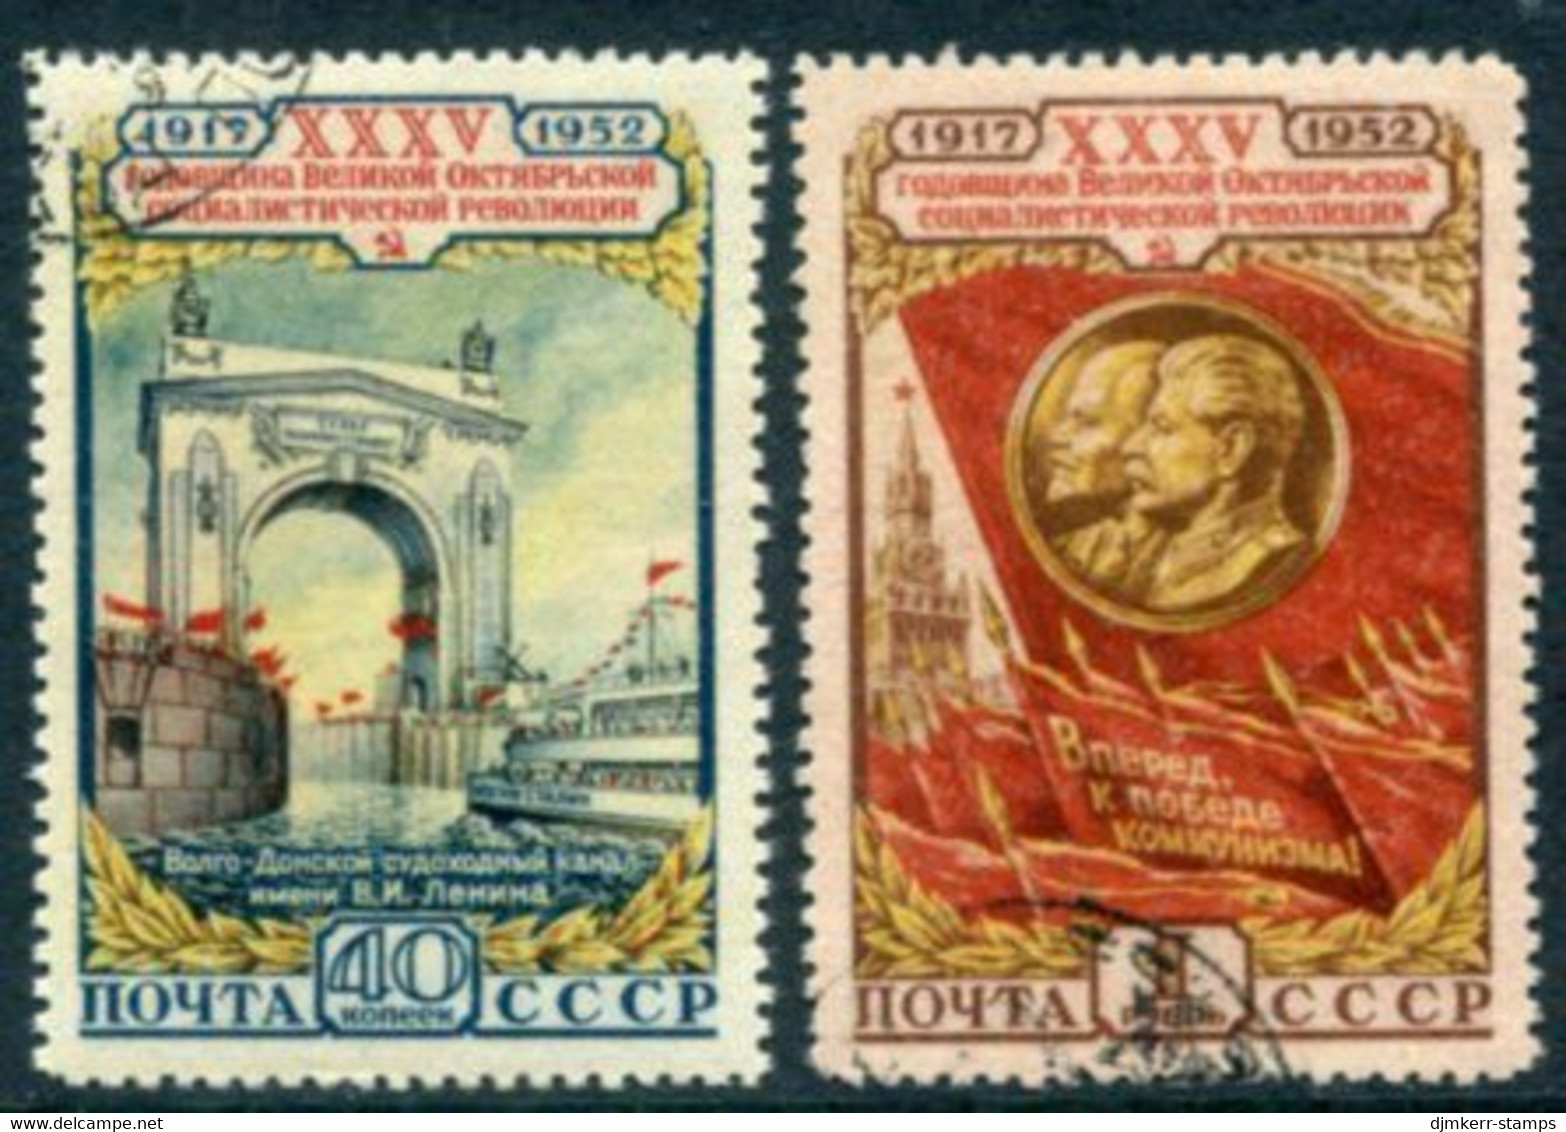 SOVIET UNION 1952 October Revolution  Anniversary Used.  Michel 1646-47 - Gebraucht